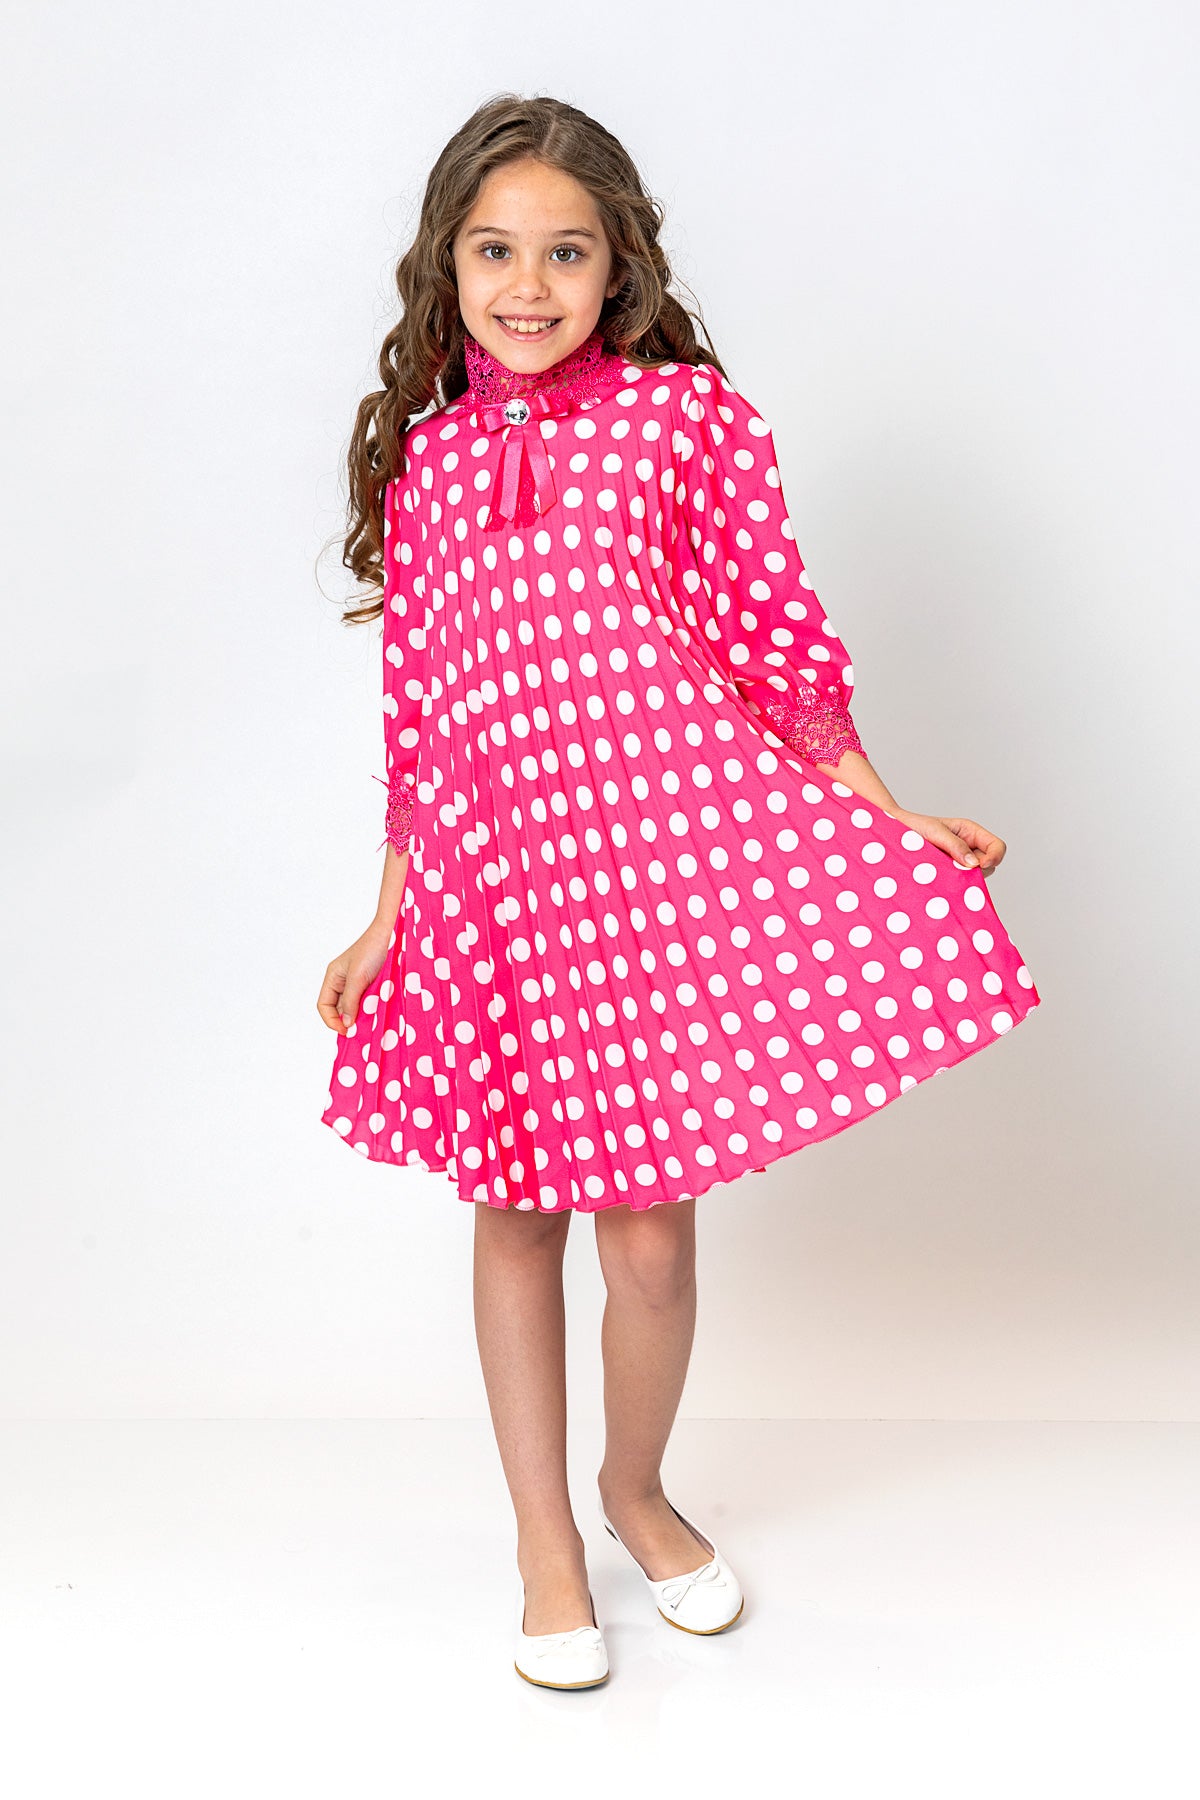 InCity Kids Girls Kurdele Yaka Puantiyeli Pileli Elbise